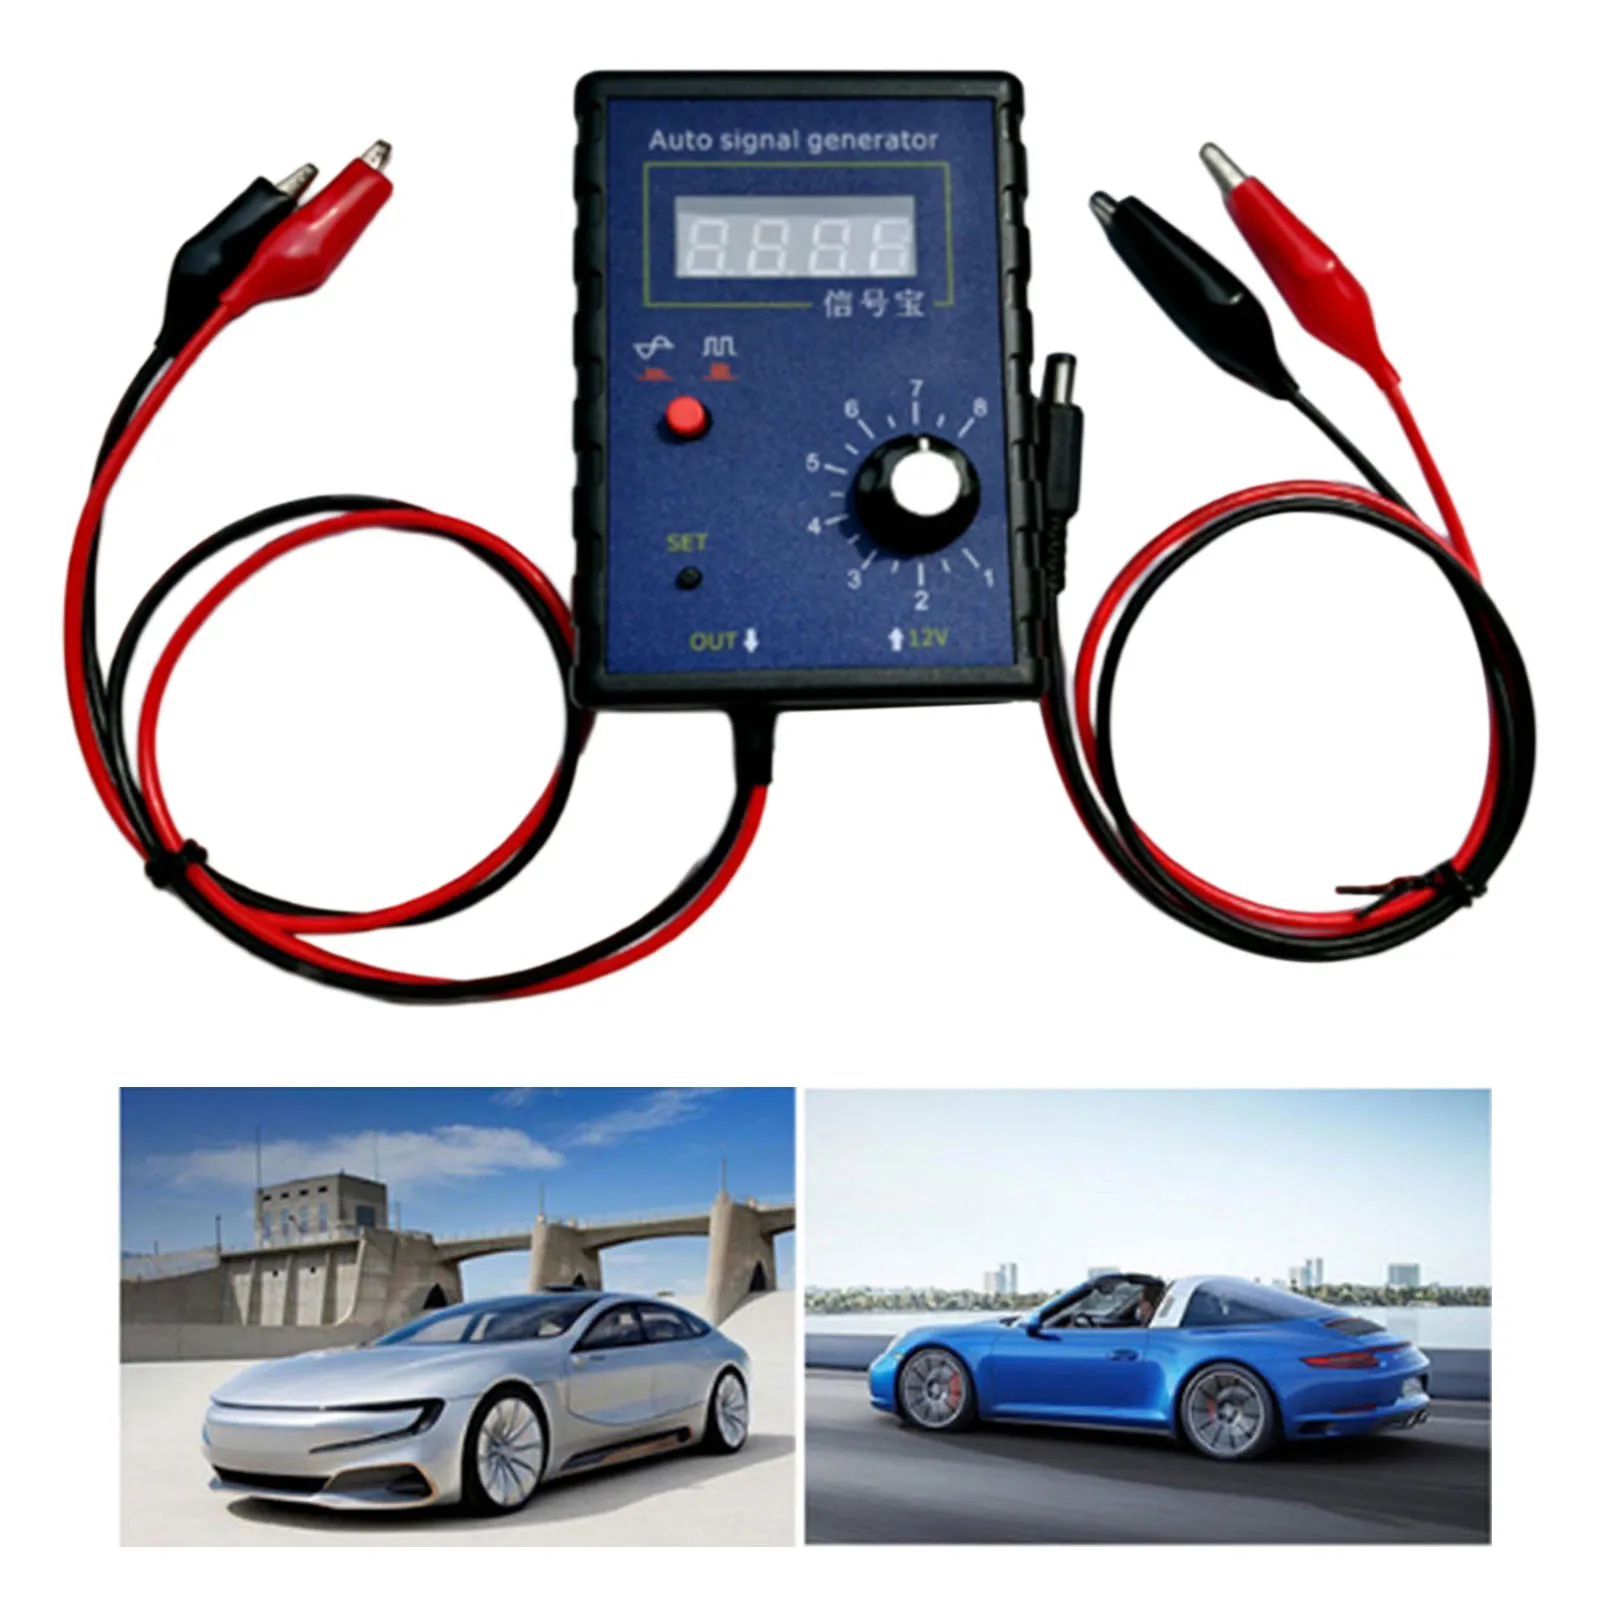 Portable Auto Vehicle Signal Generator Automobile signal generator sensor detector